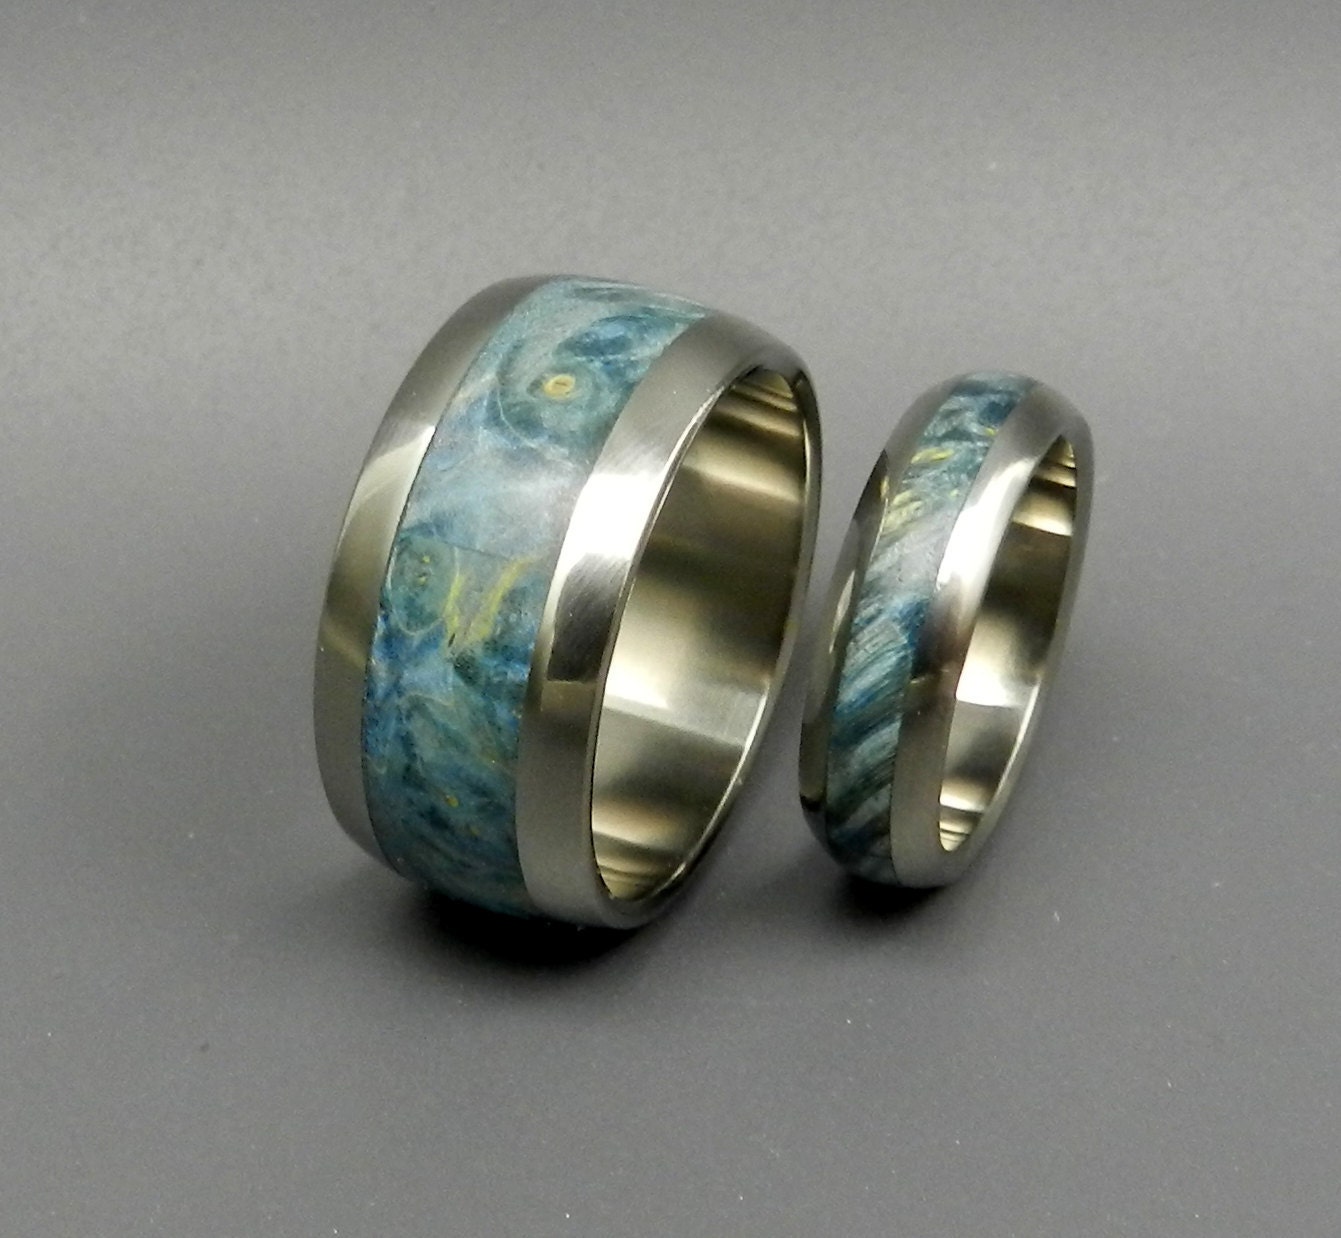 Wooden Wedding Rings on Blue Eyes Wooden Wedding Rings By Minterandrichterdes On Etsy